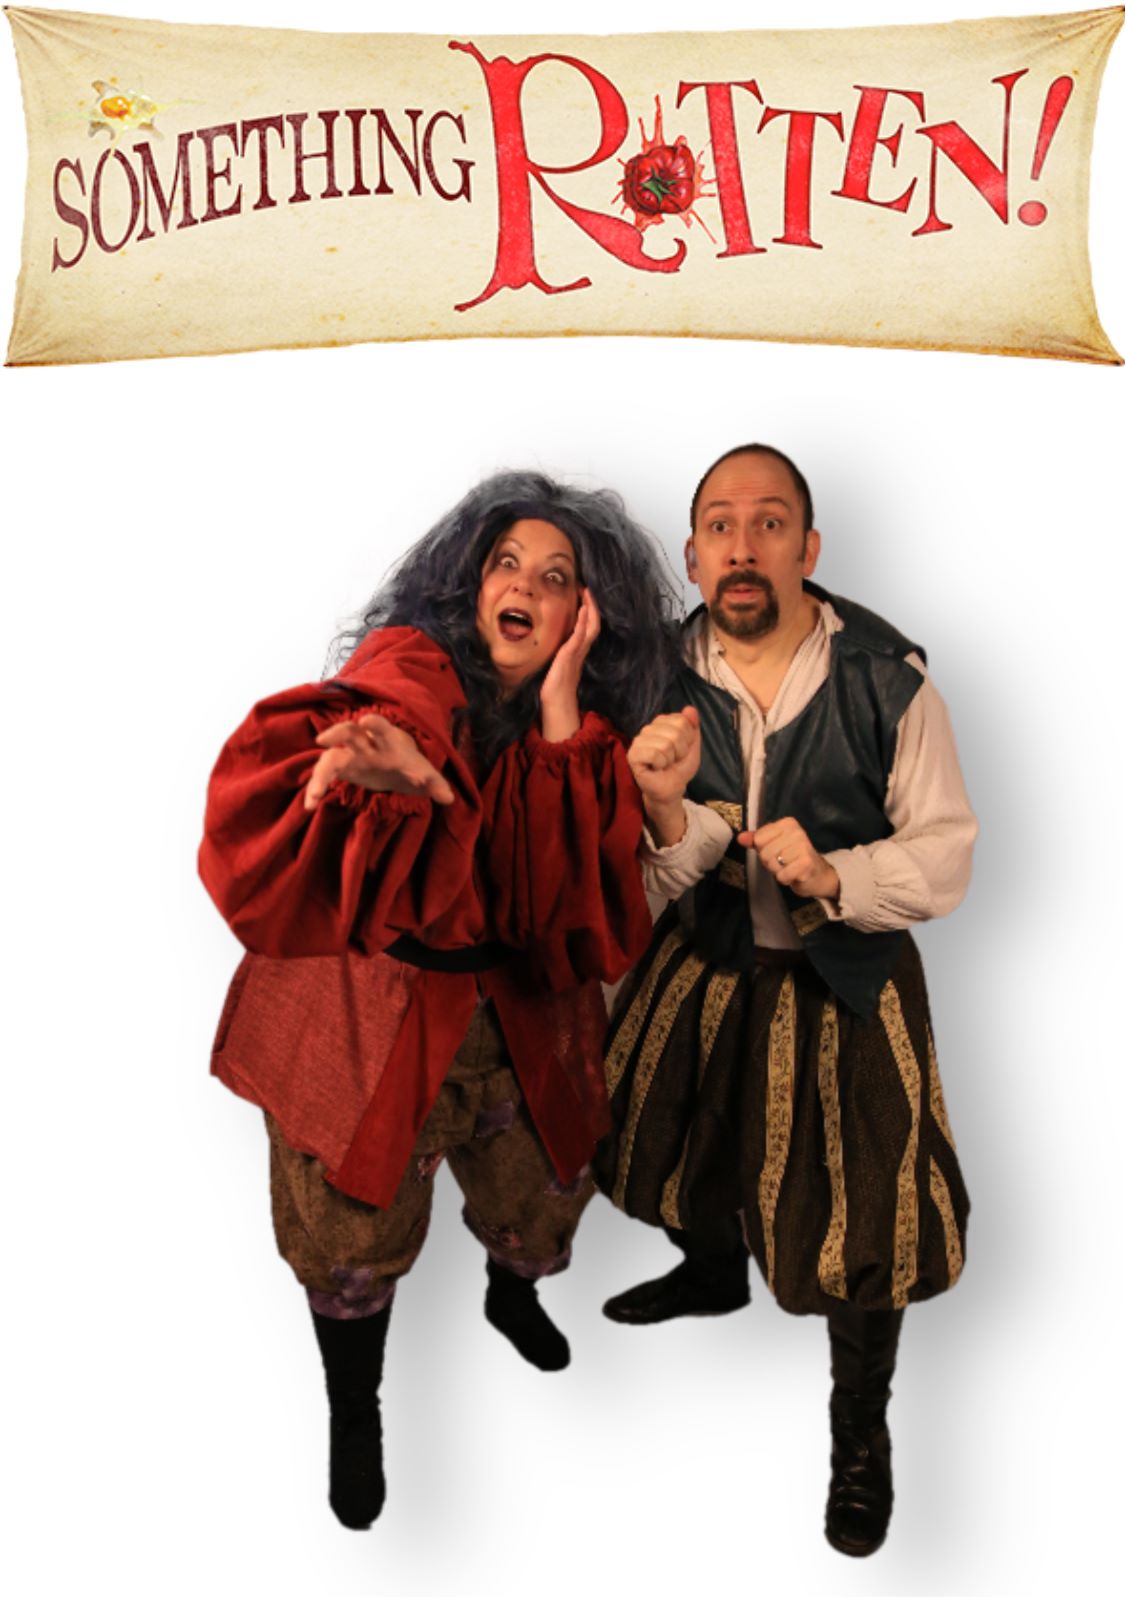 “Something Rotten!” presented by Theatre Nebula featuring (left to right) Denise Tamburrino (Nostradamus) and David Pfenninger (Nick Bottom).